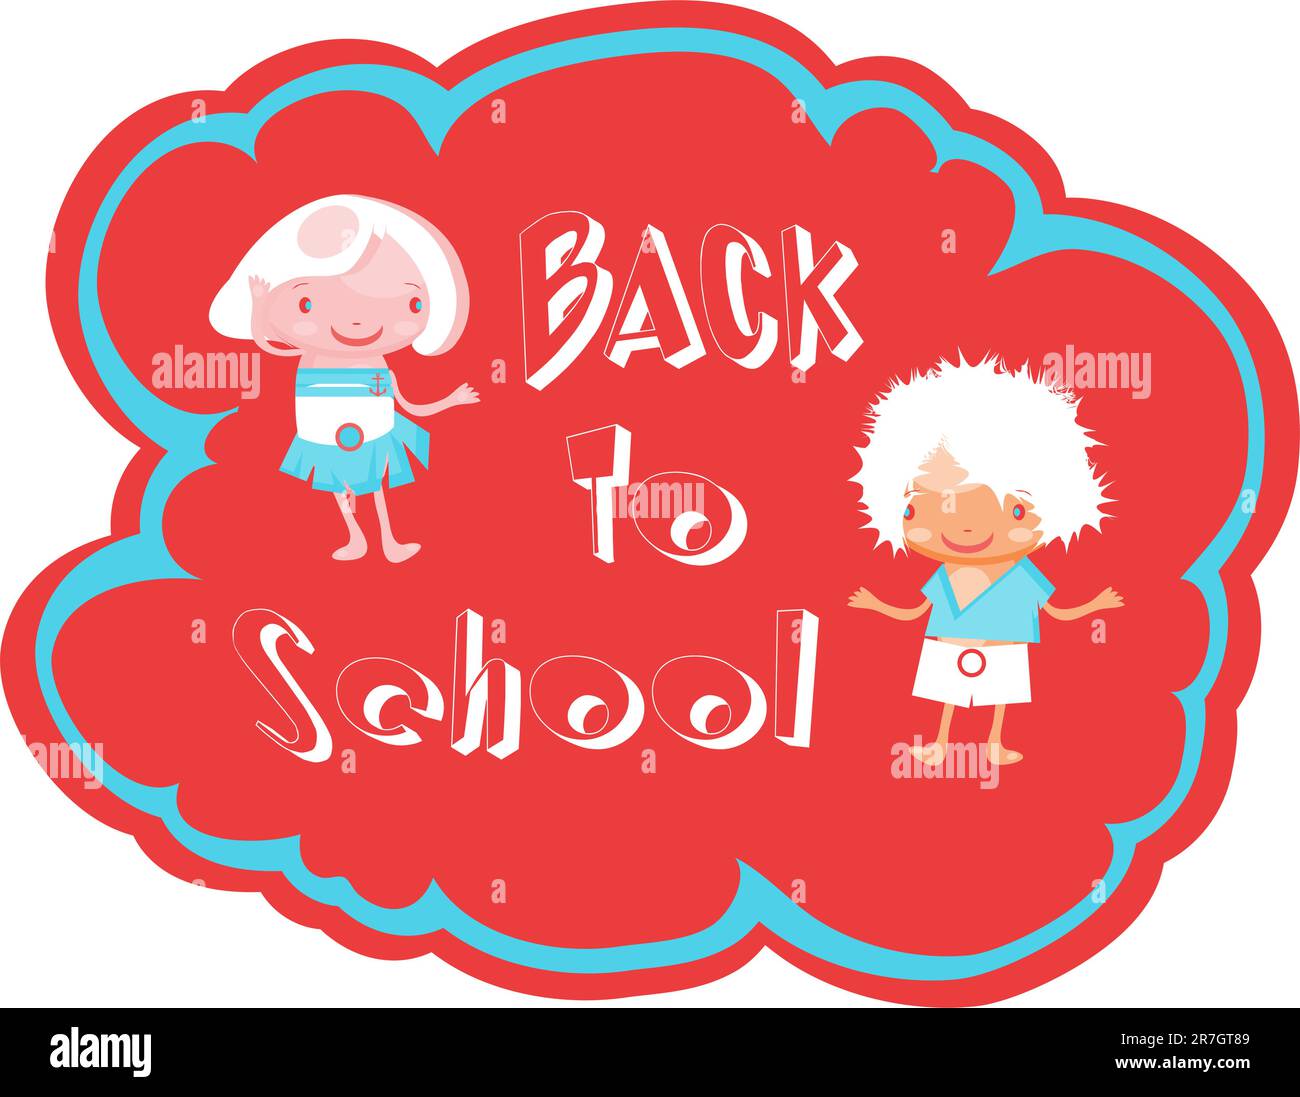 Back to school illustration with happy kids joy Stock Vector Image ...